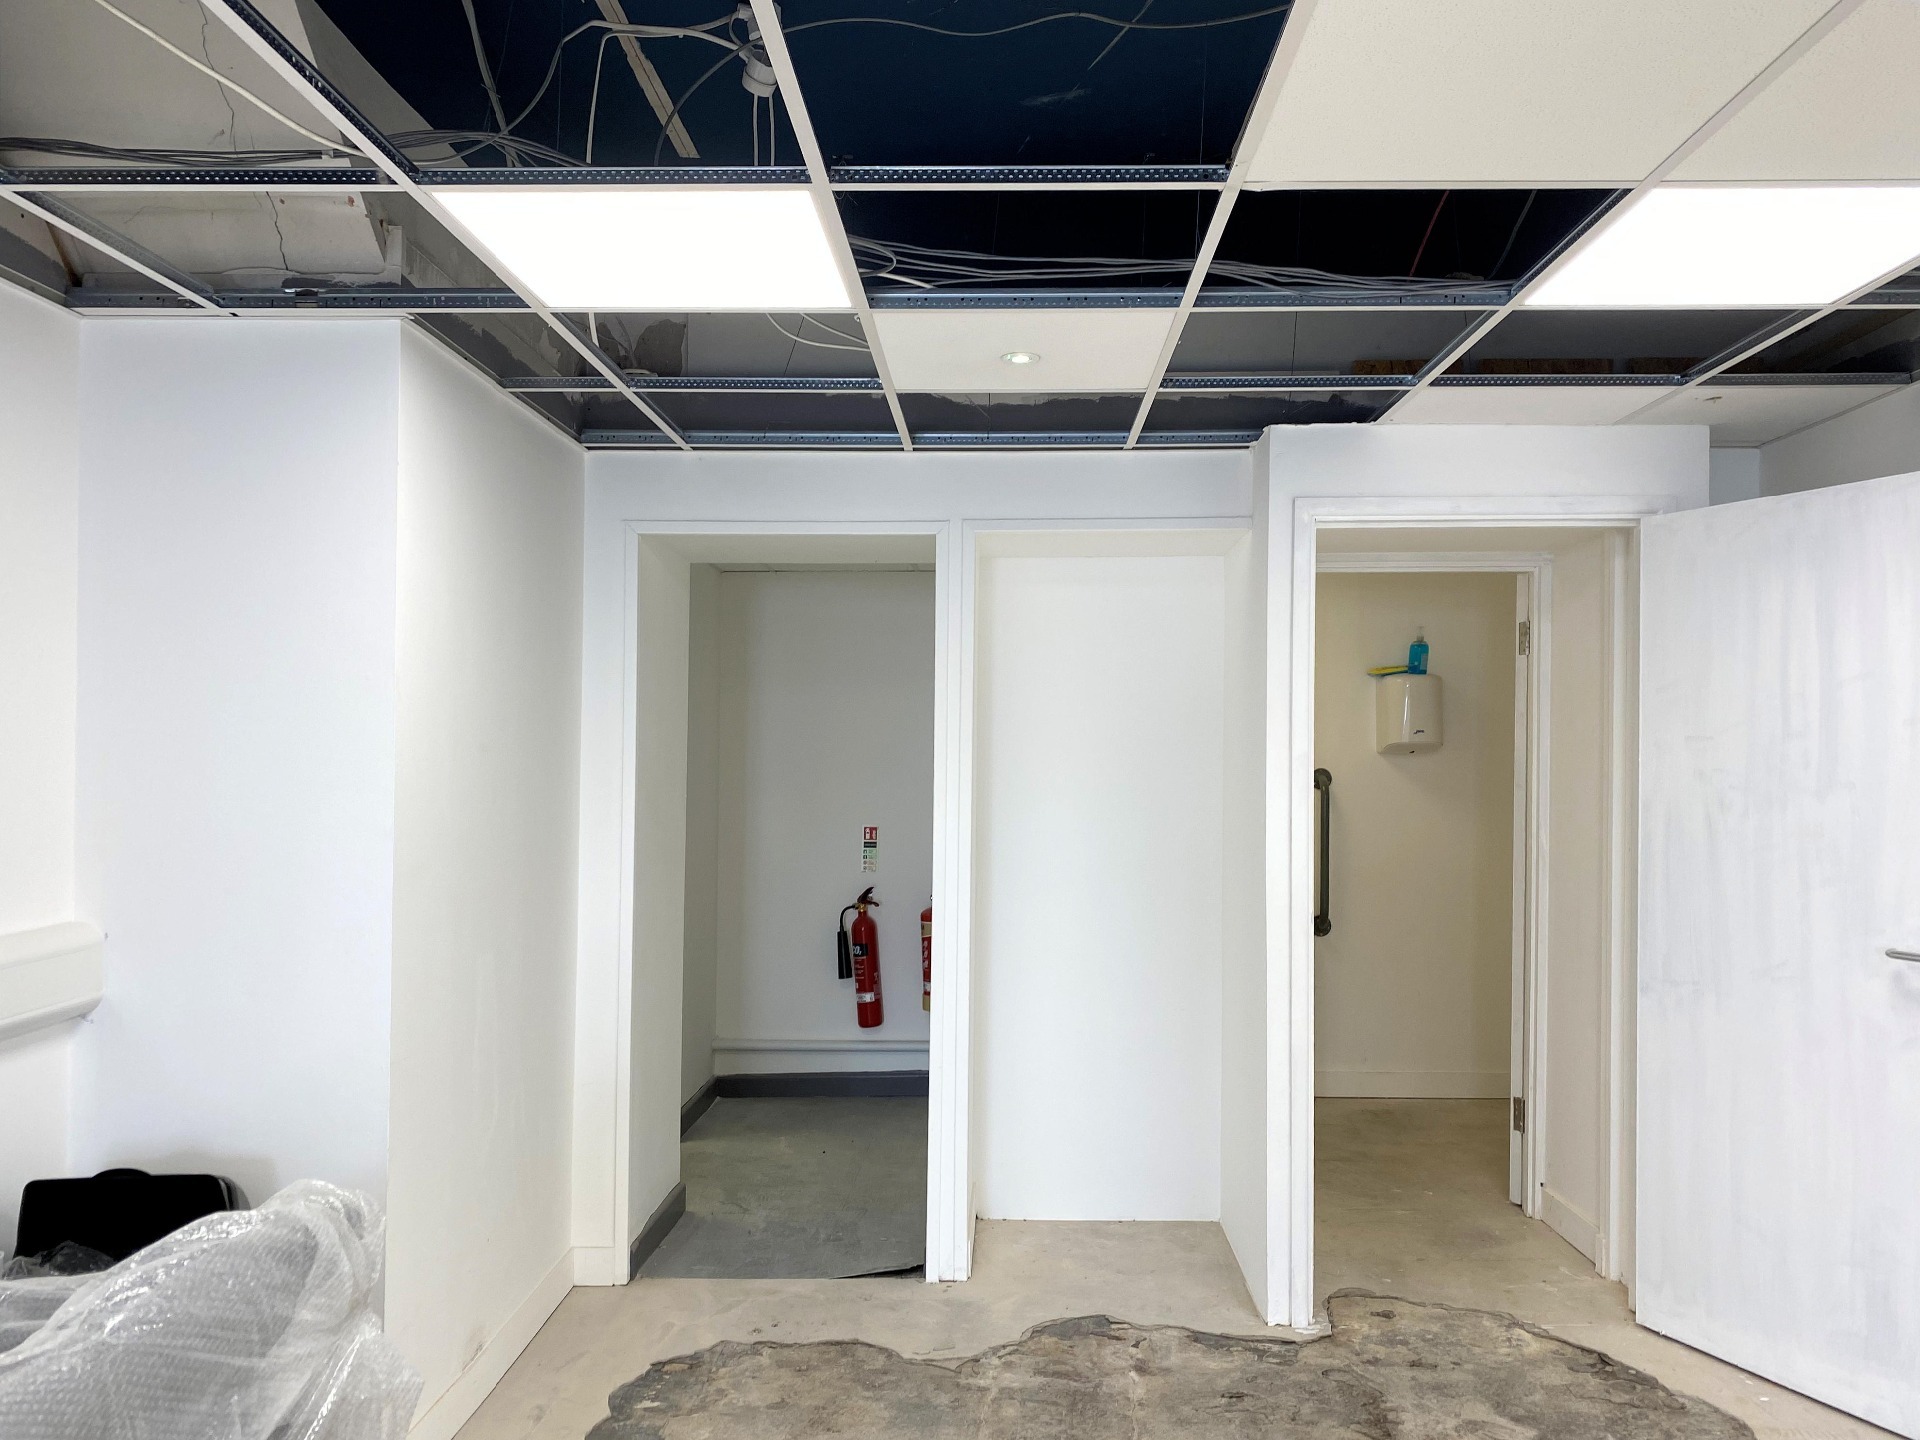 Shop Refurbishment, New ceiling grid and floor preparation, Barnstaple North Devon